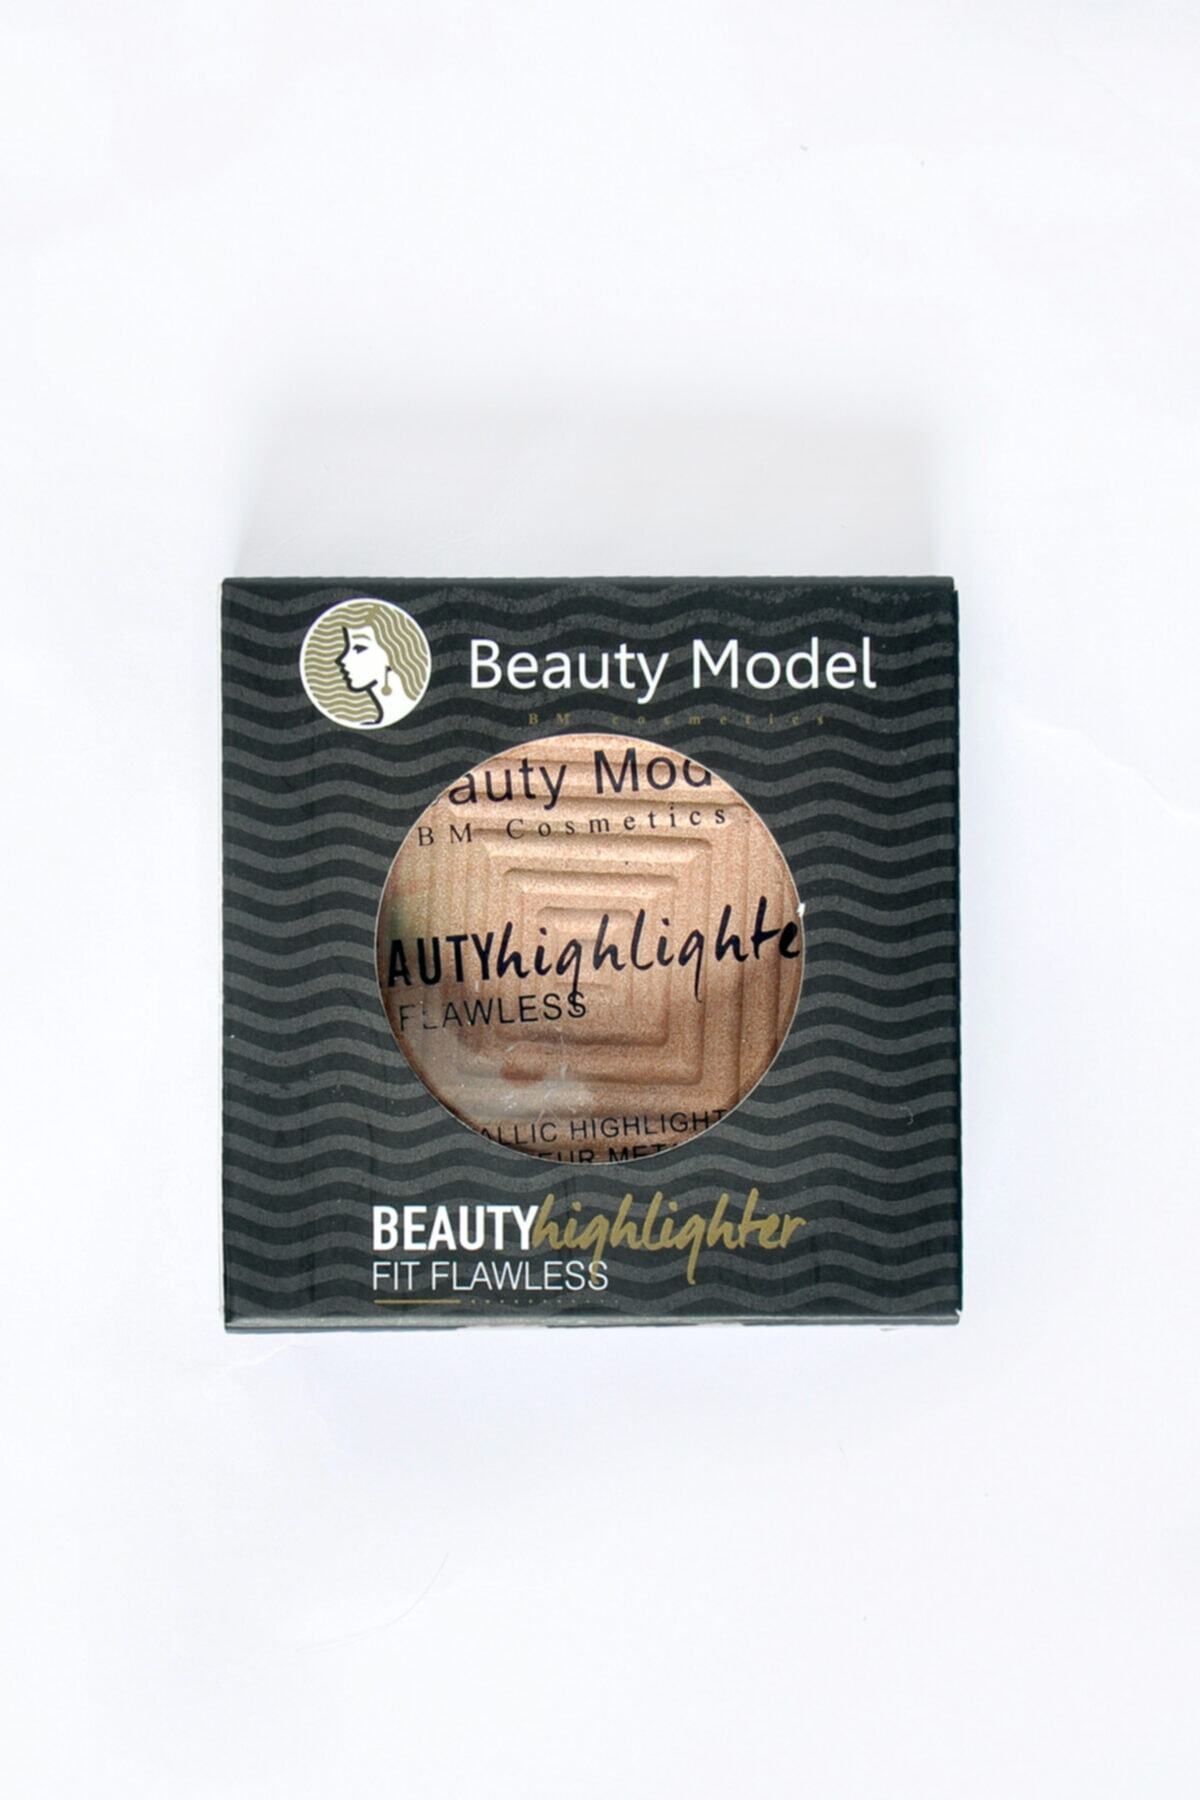 BEAUTY MODEL Metalik Aydınlatıcı - Beauty Highlighter Fıt Flawess Molten Gold Metalıc Hıghlighter